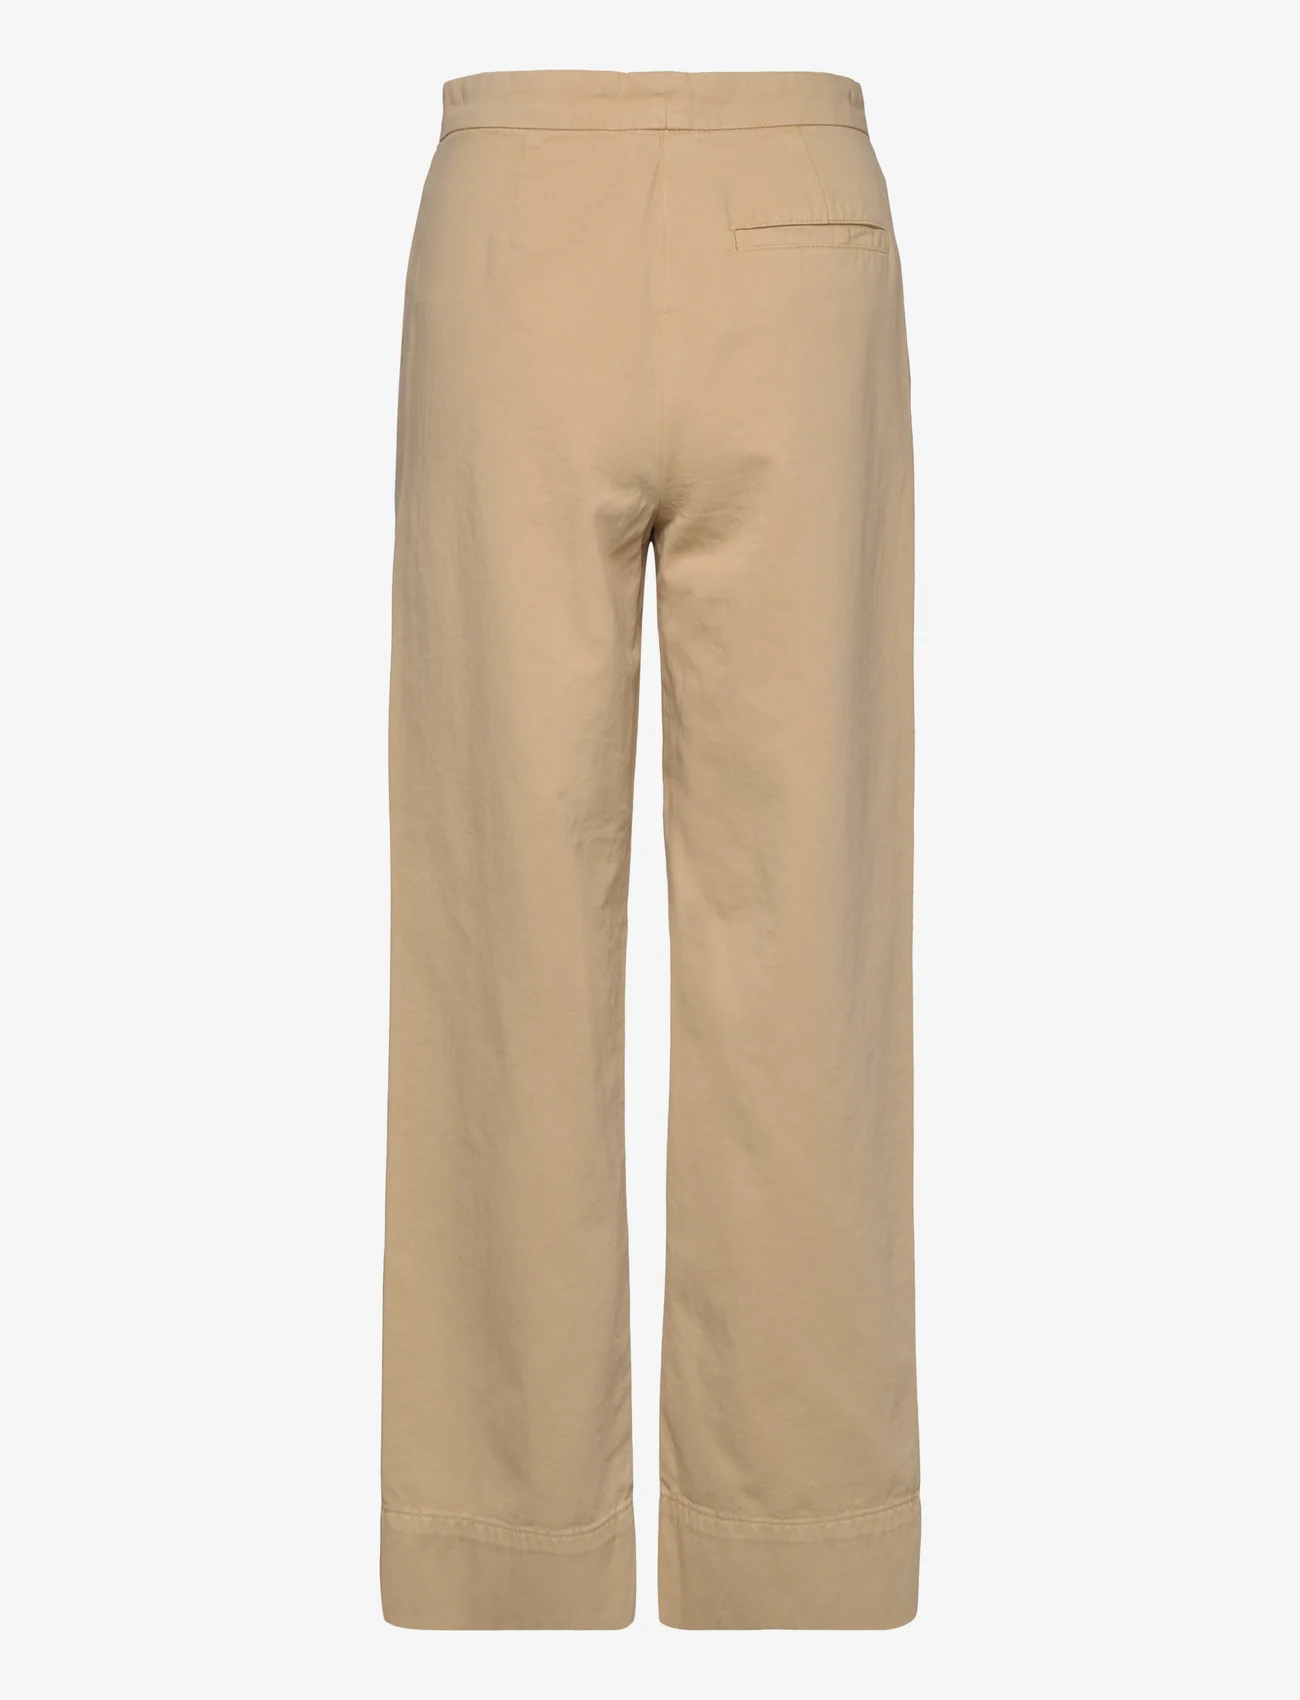 Marimekko - GAIJU SOLID - spodnie proste - beige - 1